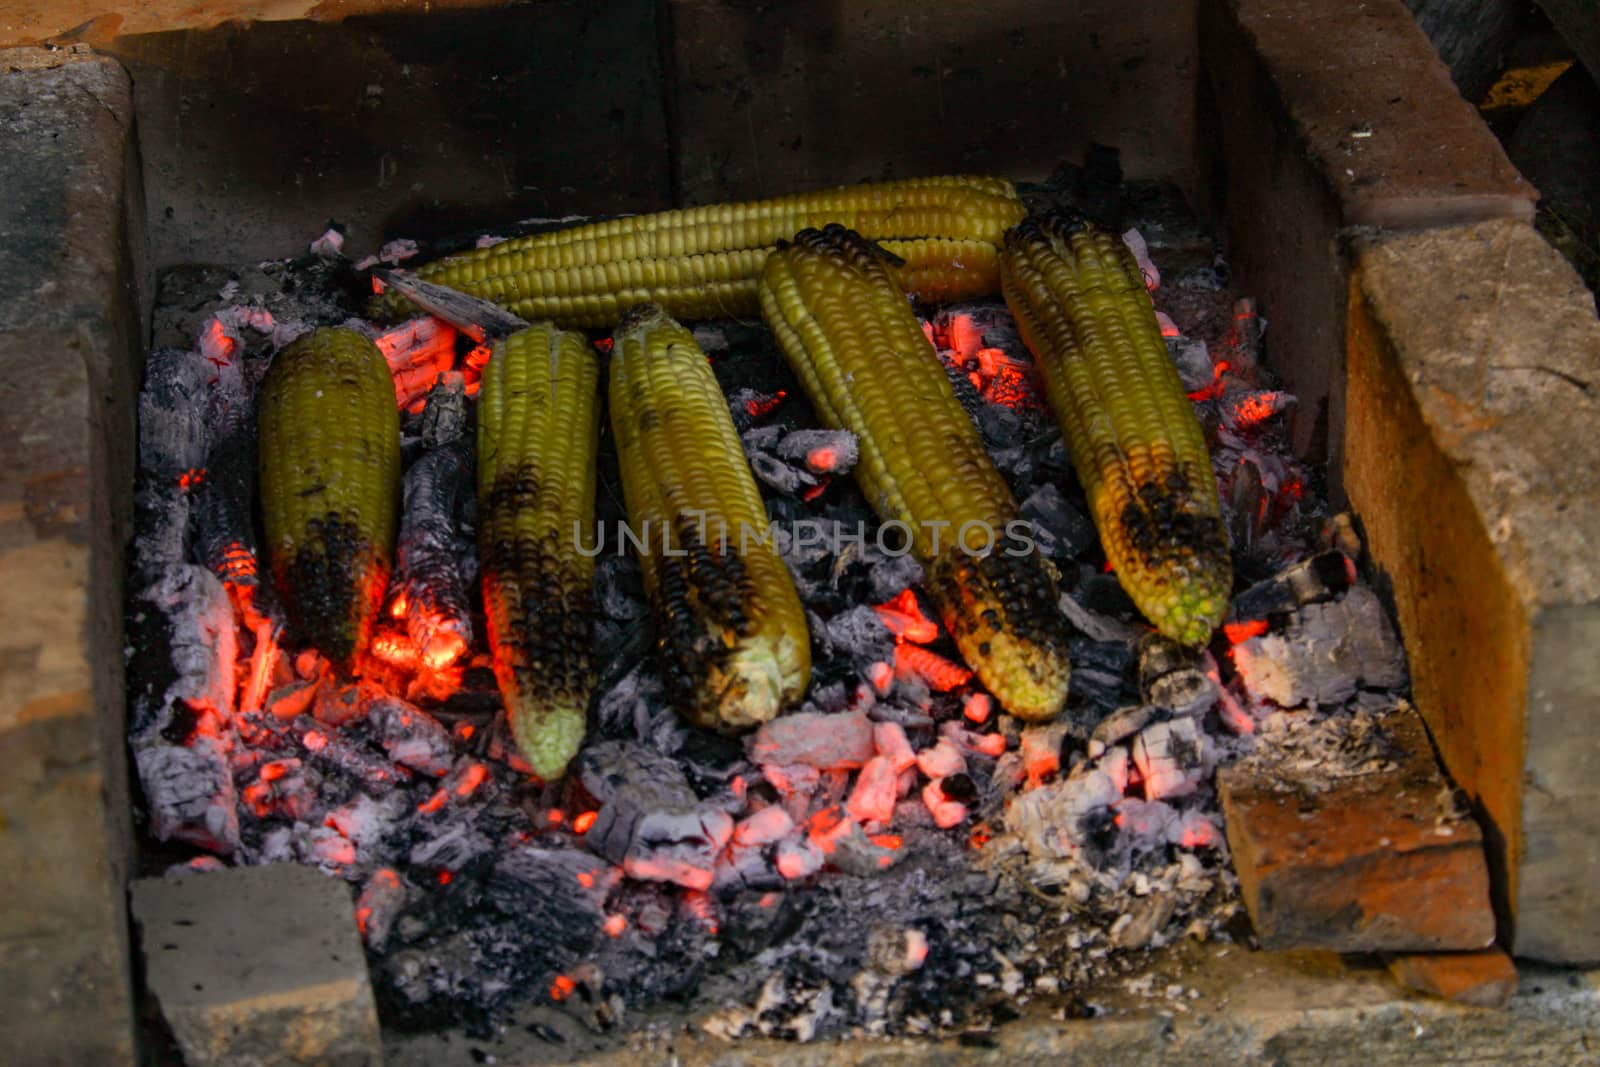 Summer nights by the fire. Roasting corn on the cob at night on summer days. Zavidovici, Bosnia and Herzegovina.